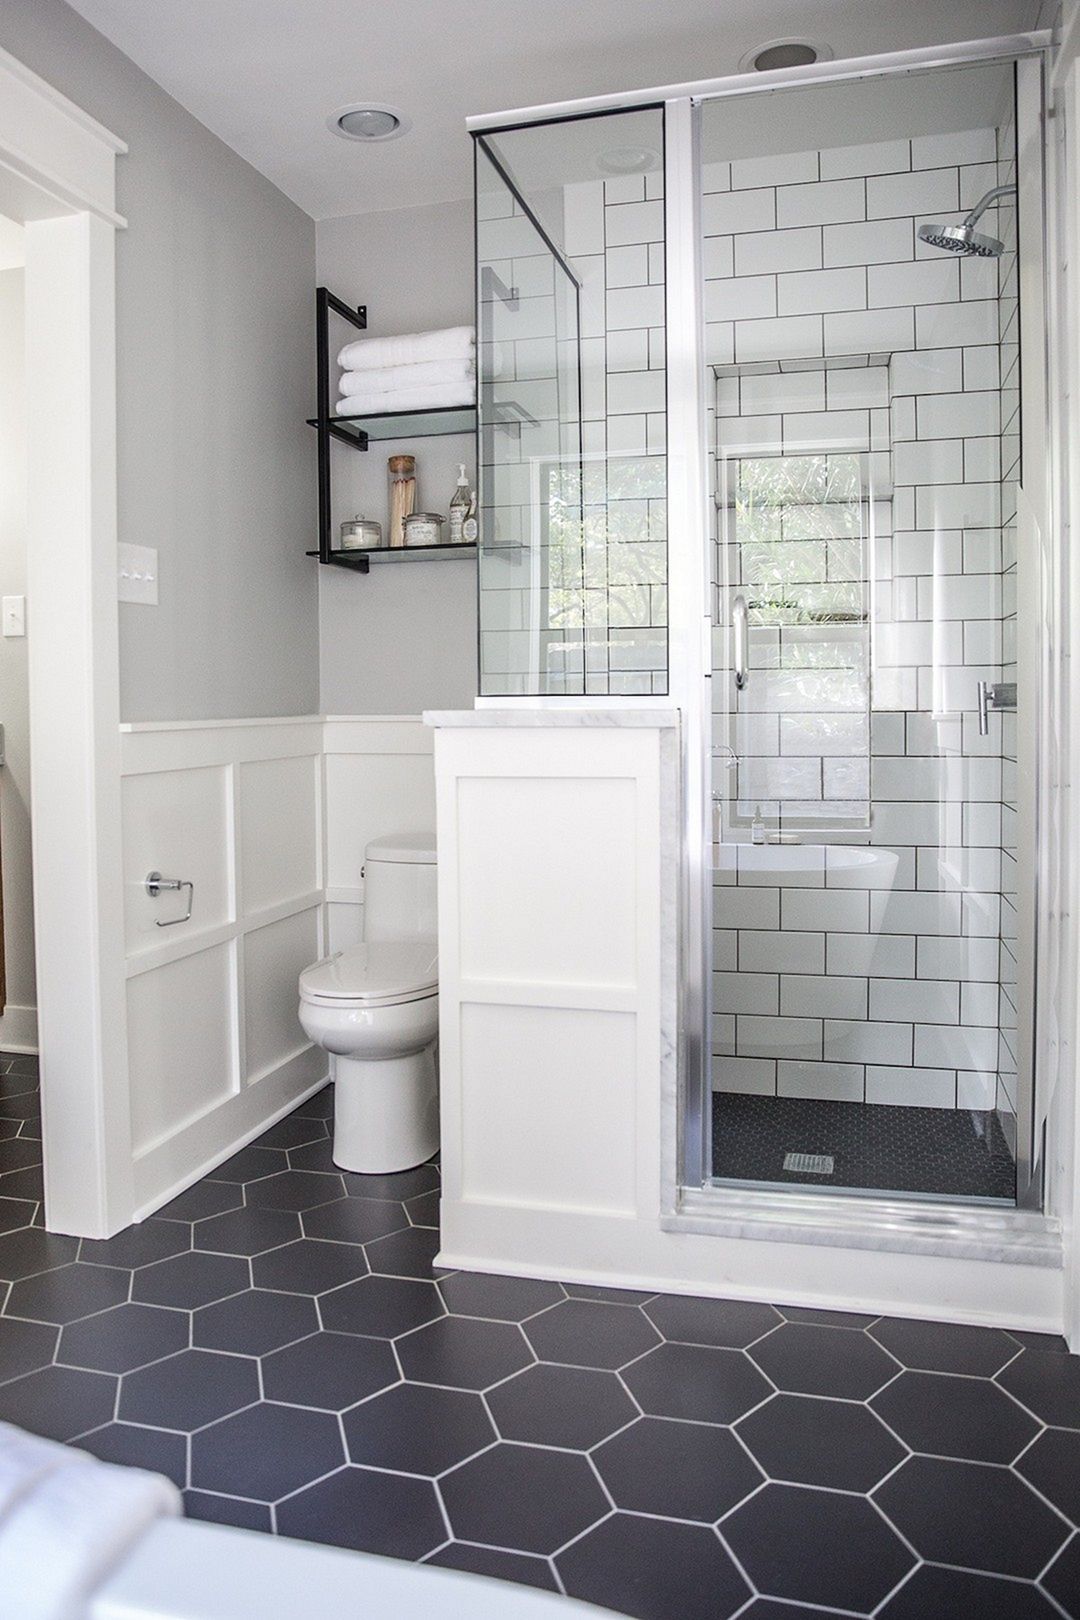 25 Wonderful Small Bathroom Floor Tile Design Ideas To Inspire You